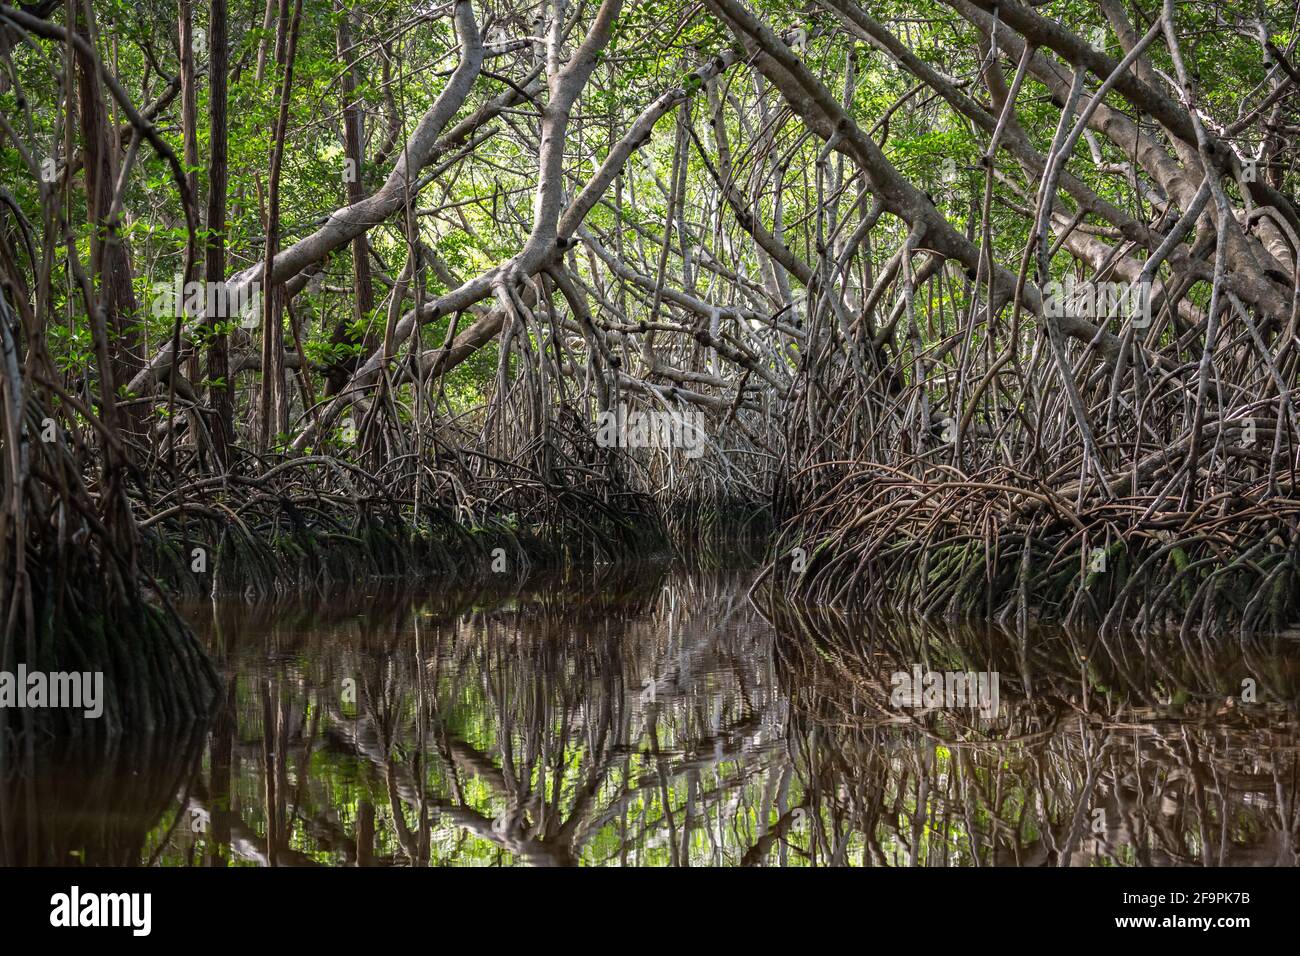 Mangrovendickicht an der Lagune von Celestun, Yucatan, Mexiko Stockfoto